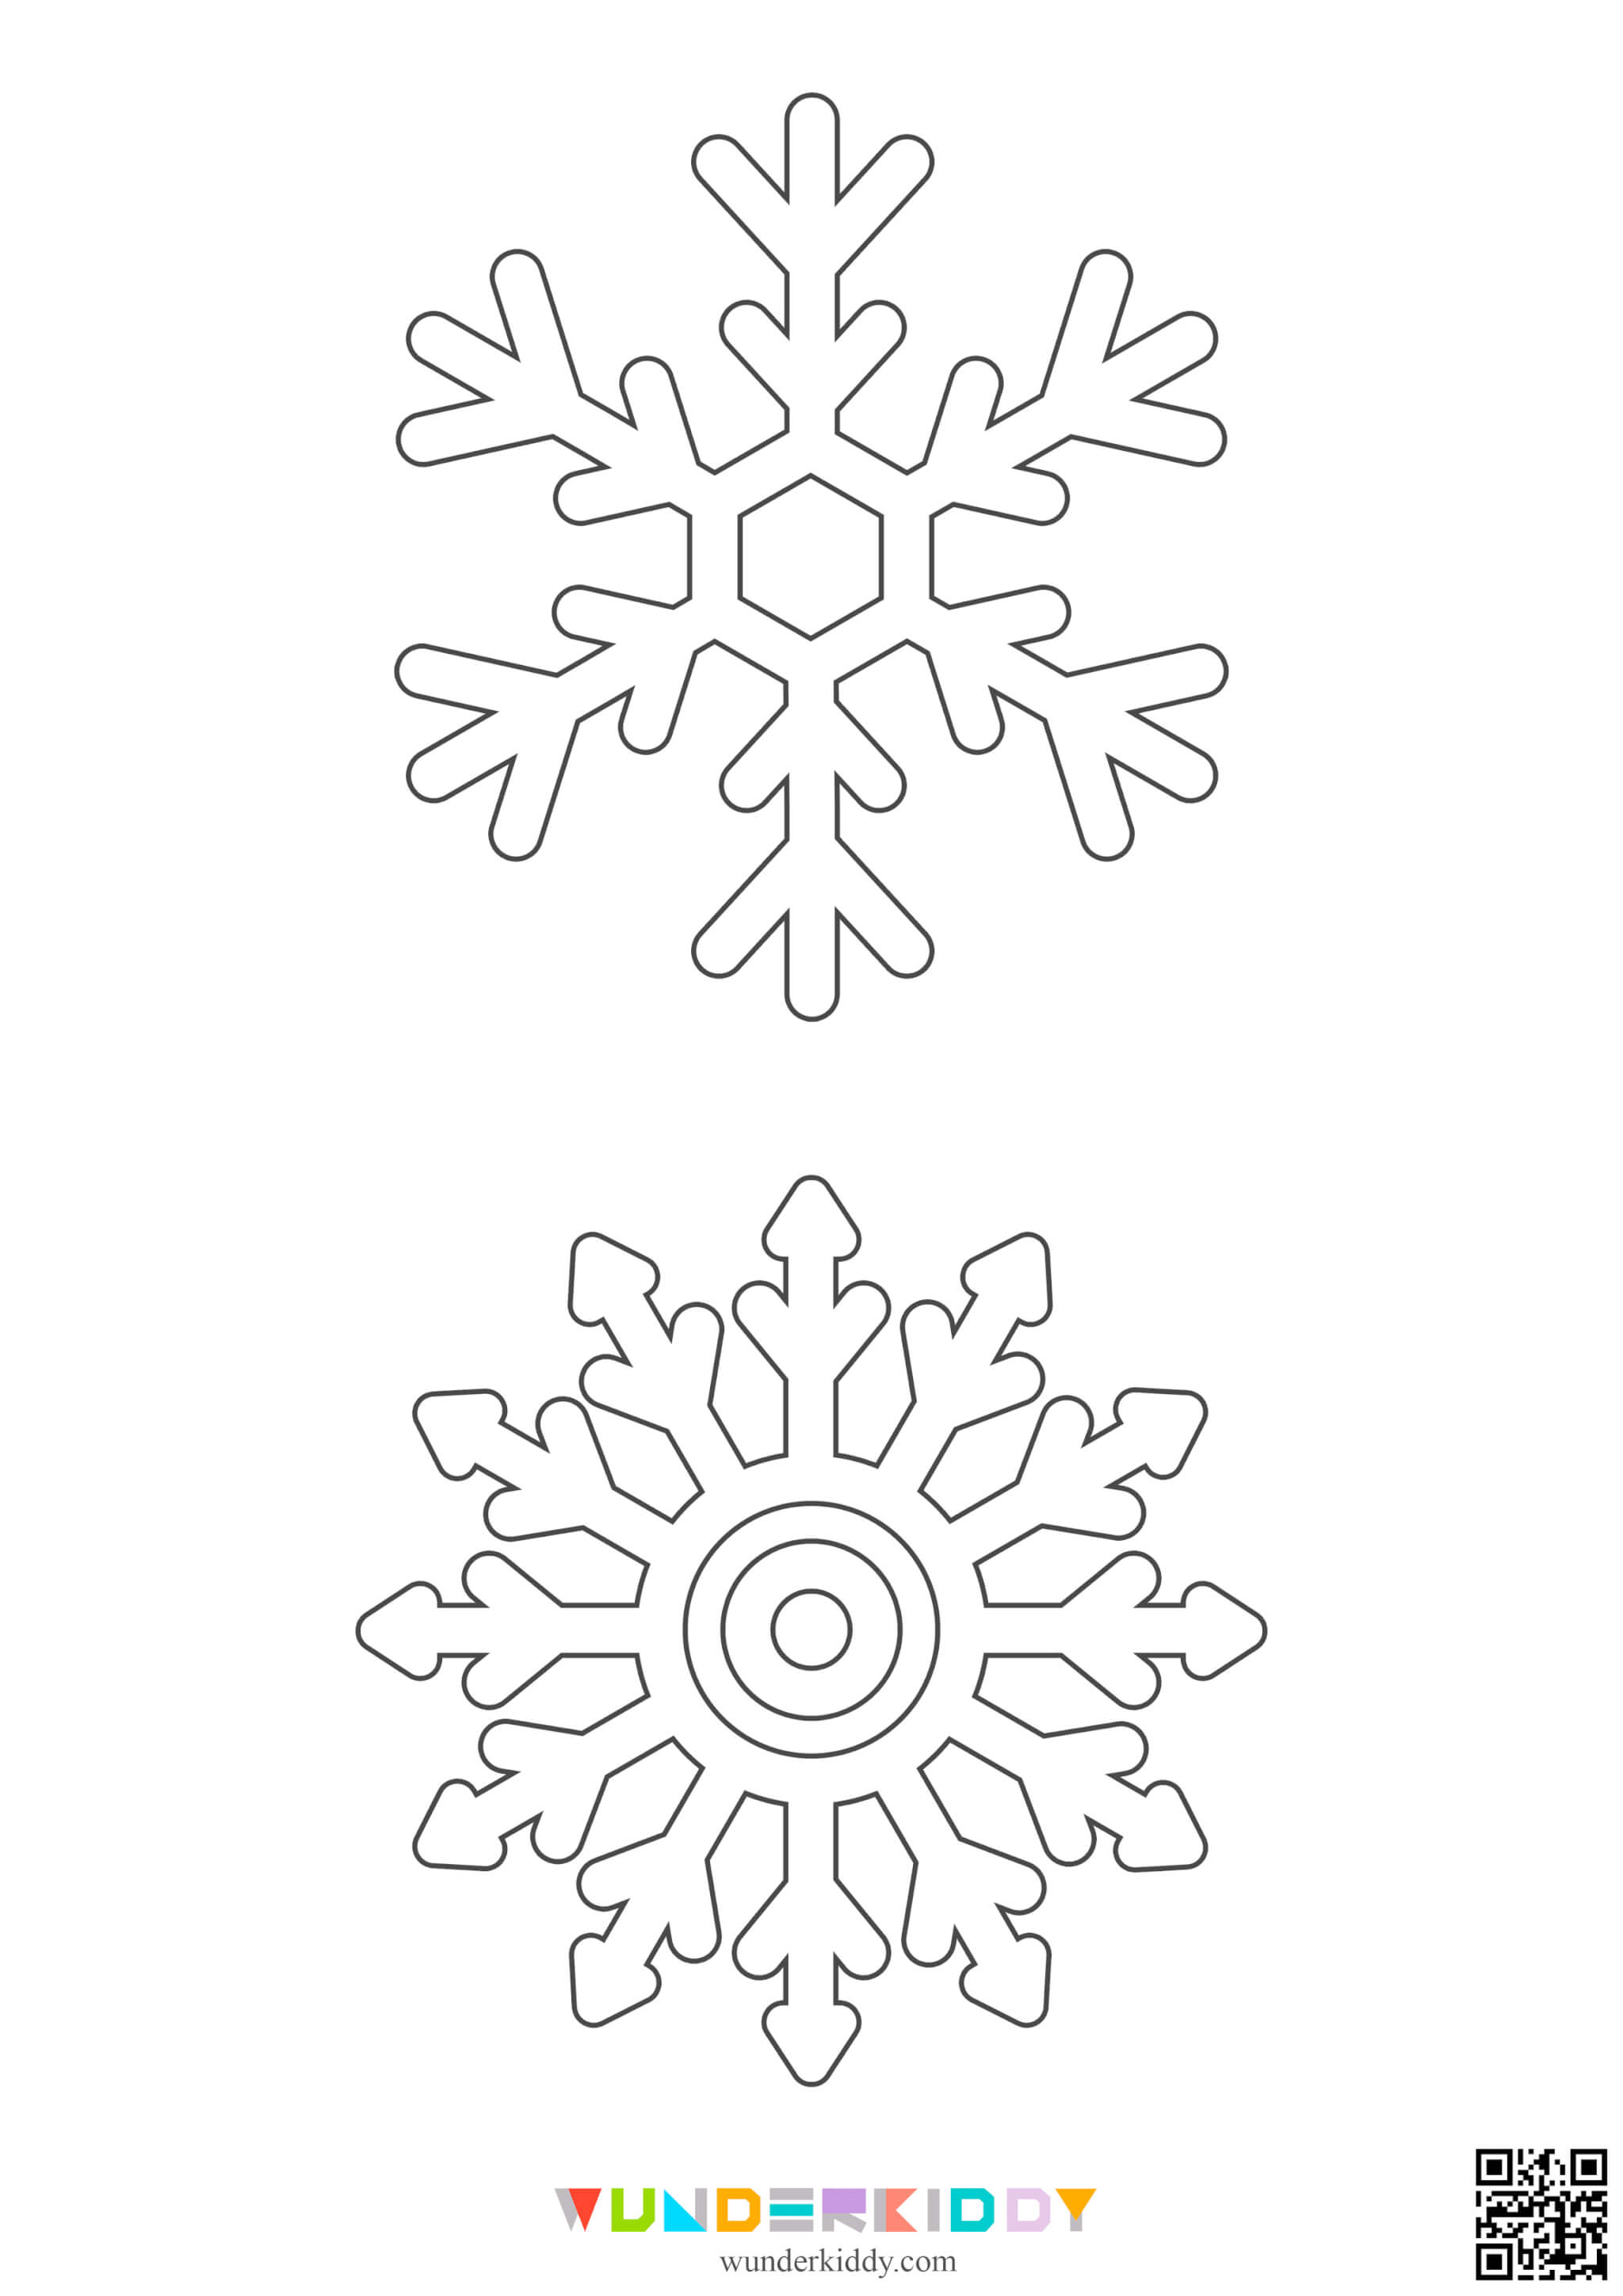 Snowflake Stencil Patterns - Image 22